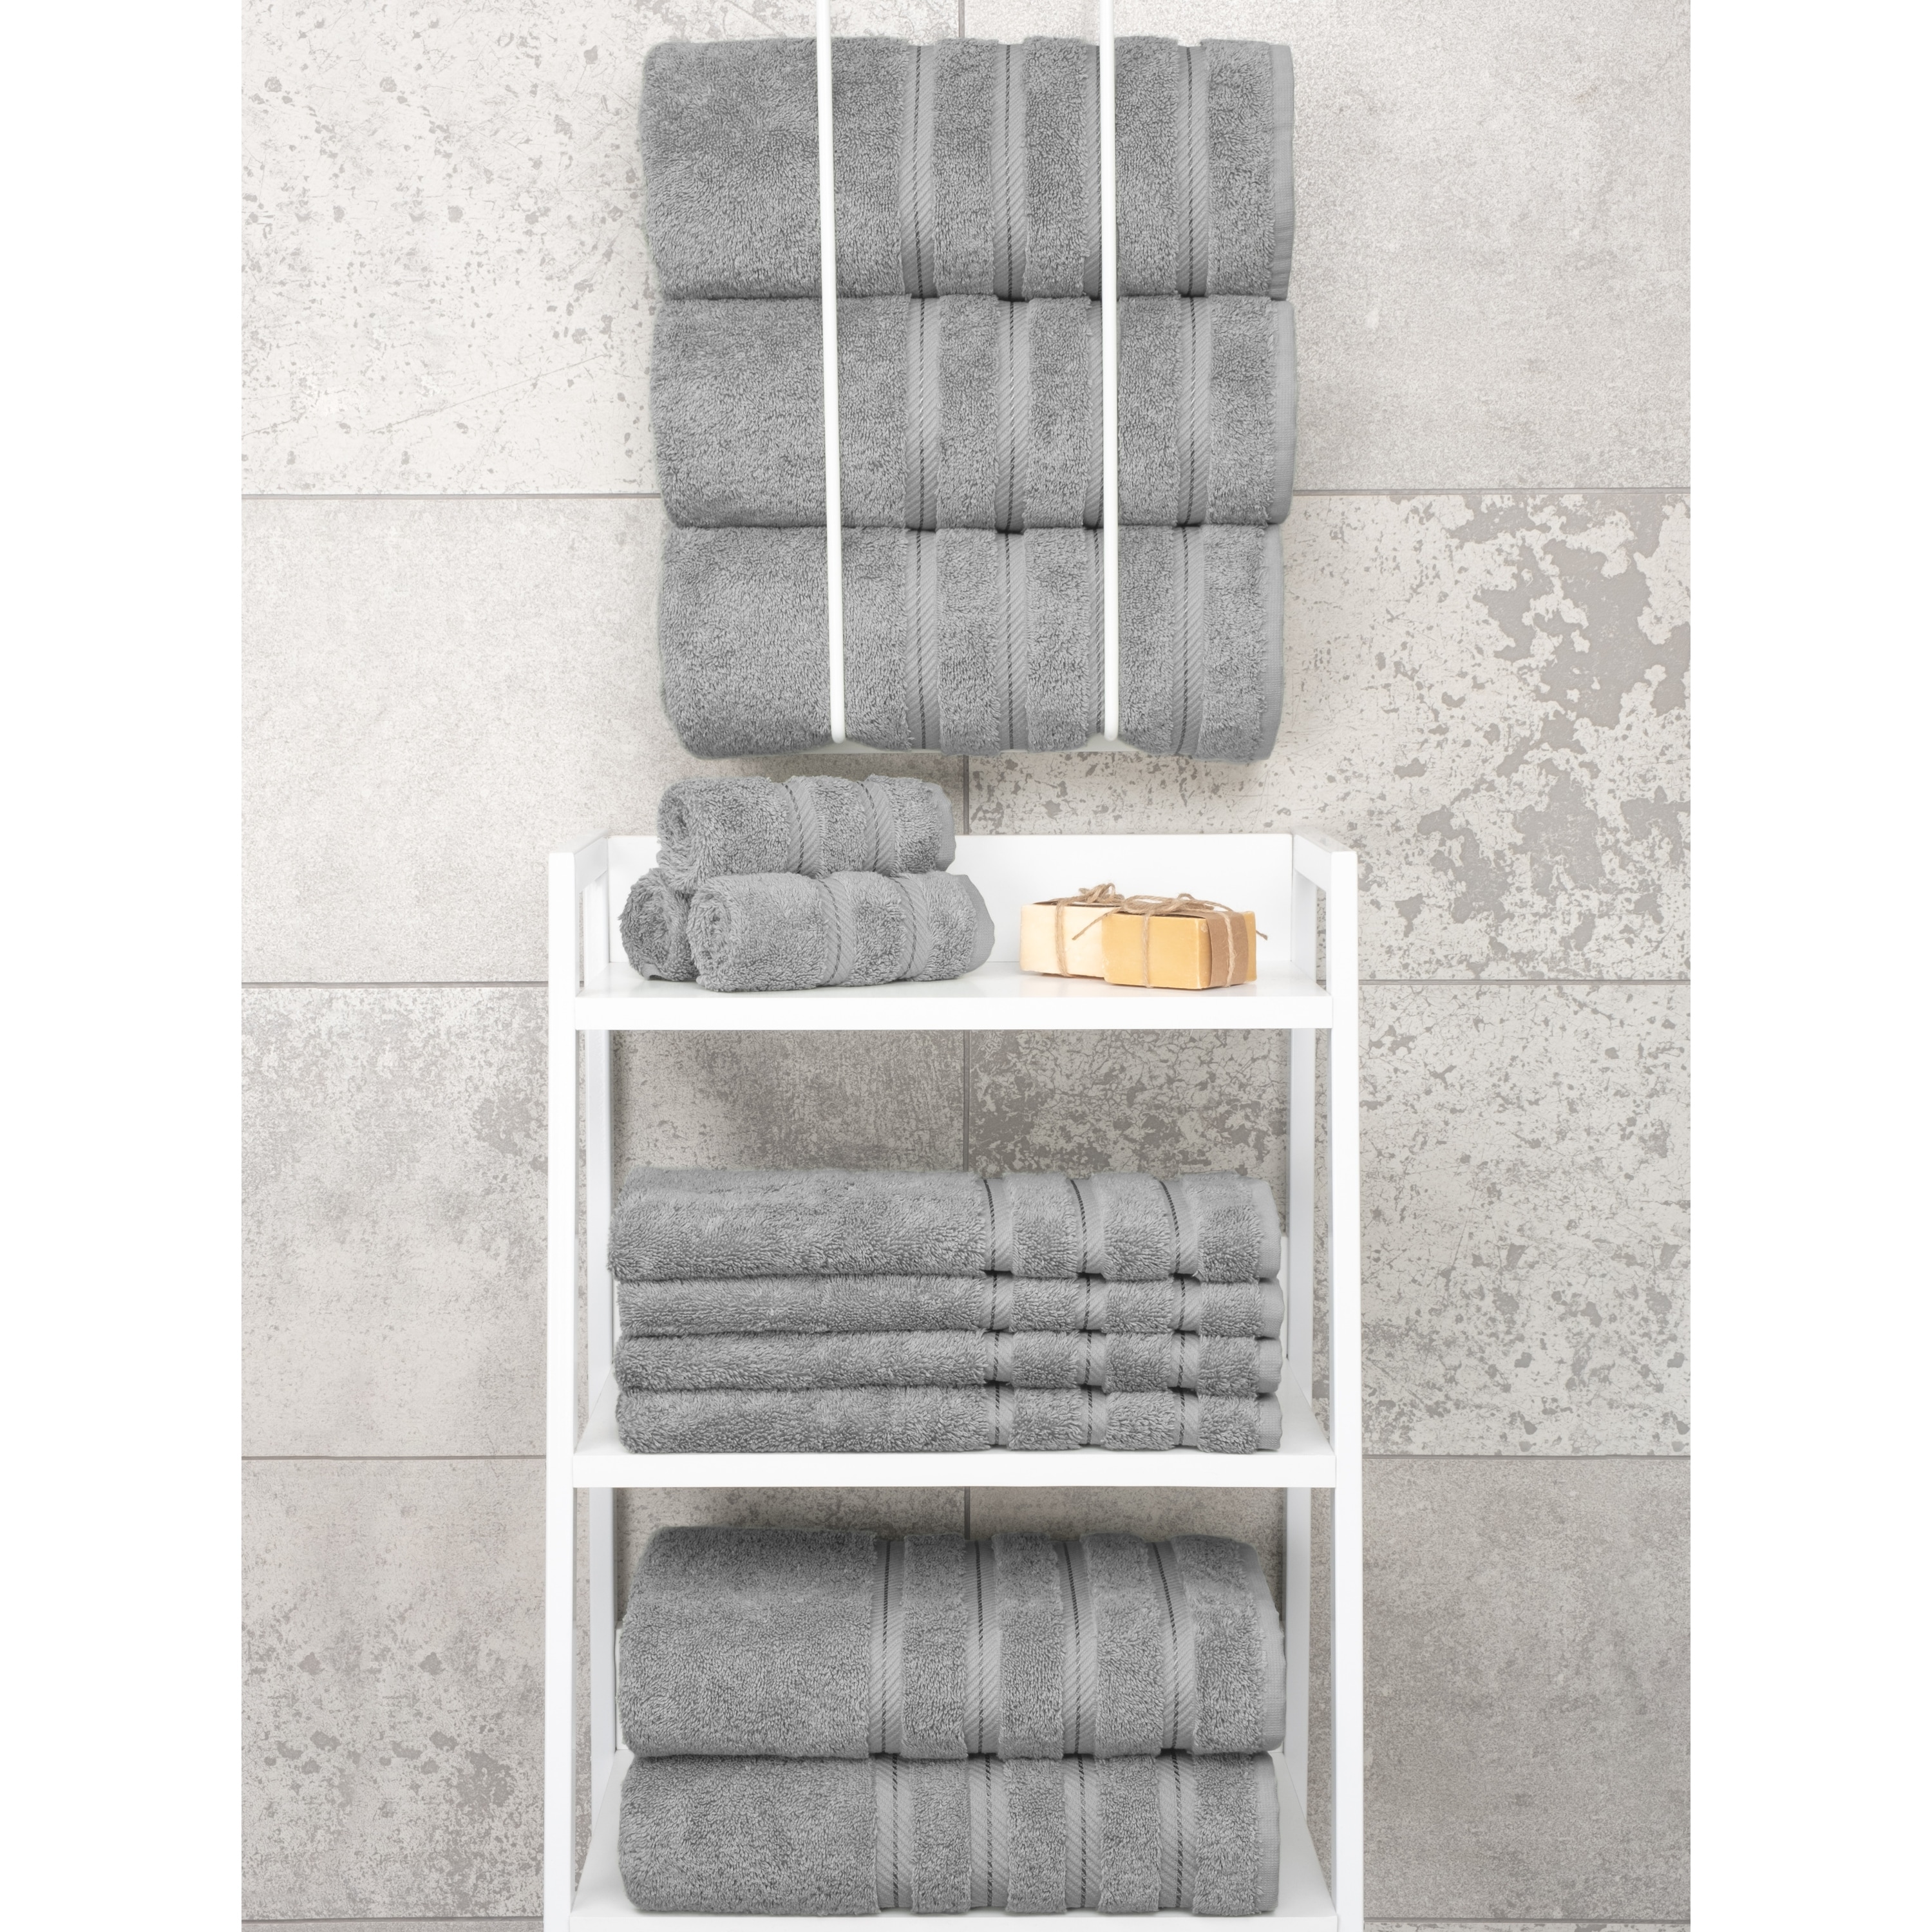 https://ak1.ostkcdn.com/images/products/is/images/direct/386dfc27eb6aca69b24ac0c8da1701e90ae2368e/American-Soft-Linen-Turkish-Cotton-4-Piece-Bath-Towel-Set.jpg